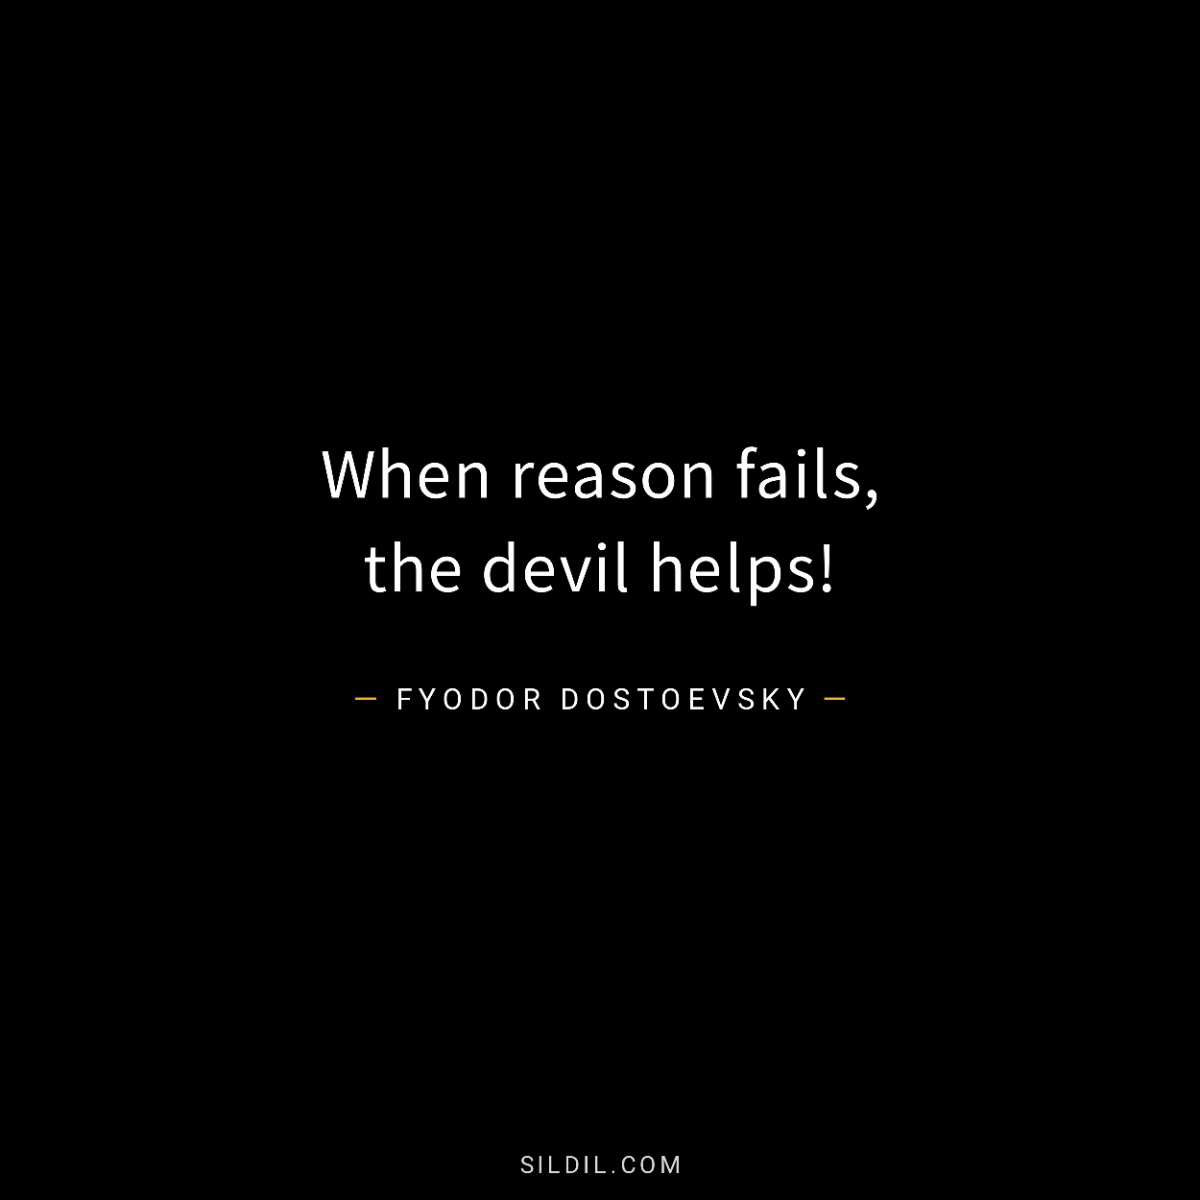 When reason fails, the devil helps!